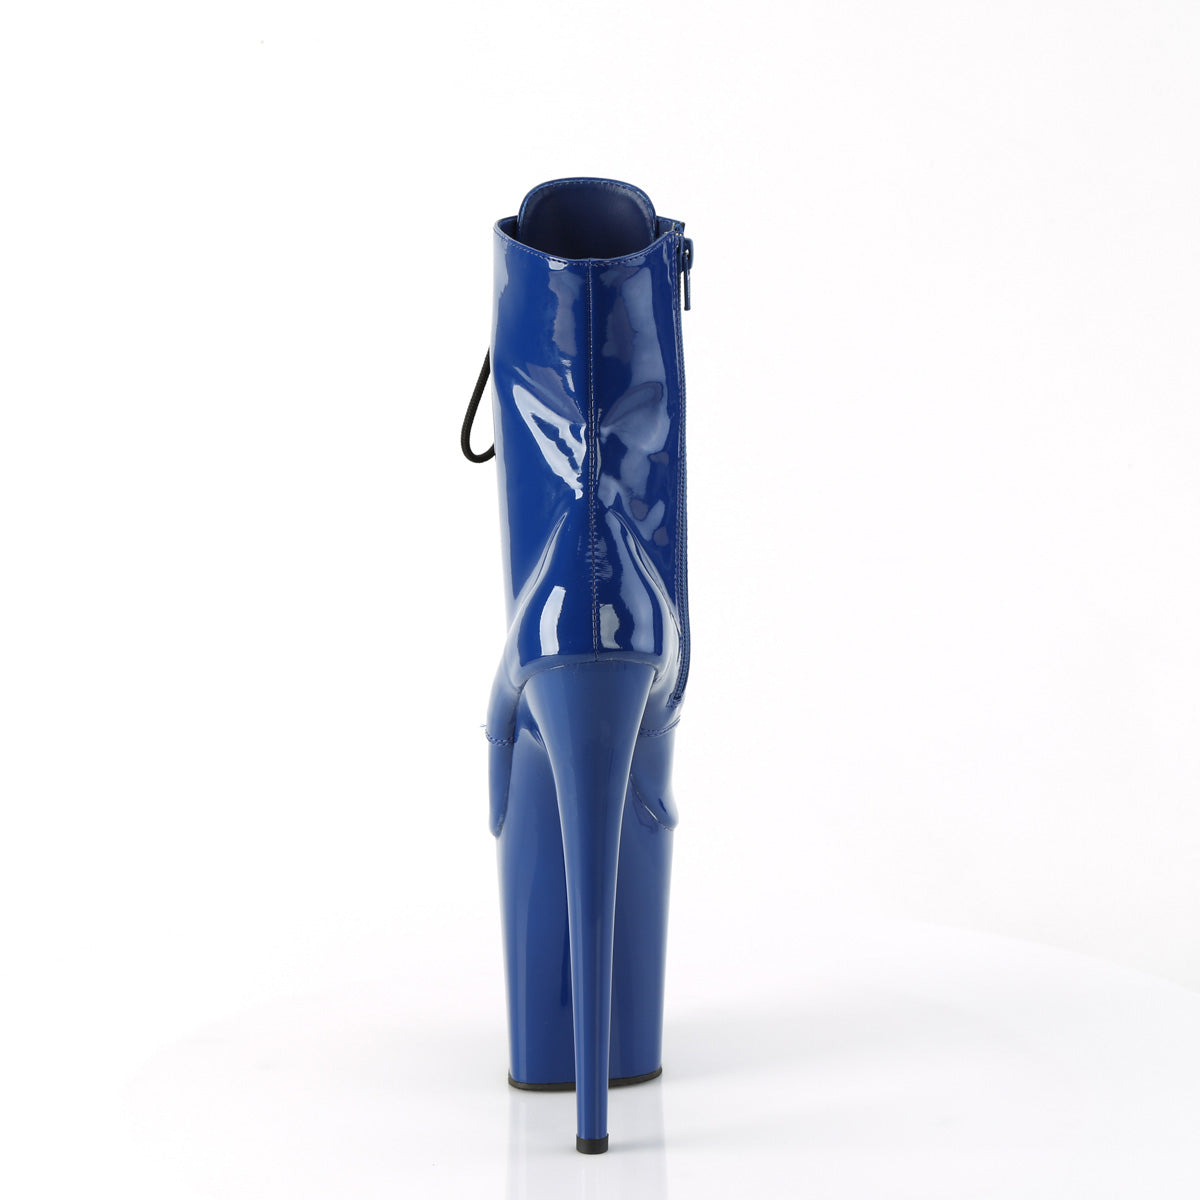 8 Inch Heel FLAMINGO-1020 Royal Blue Patent